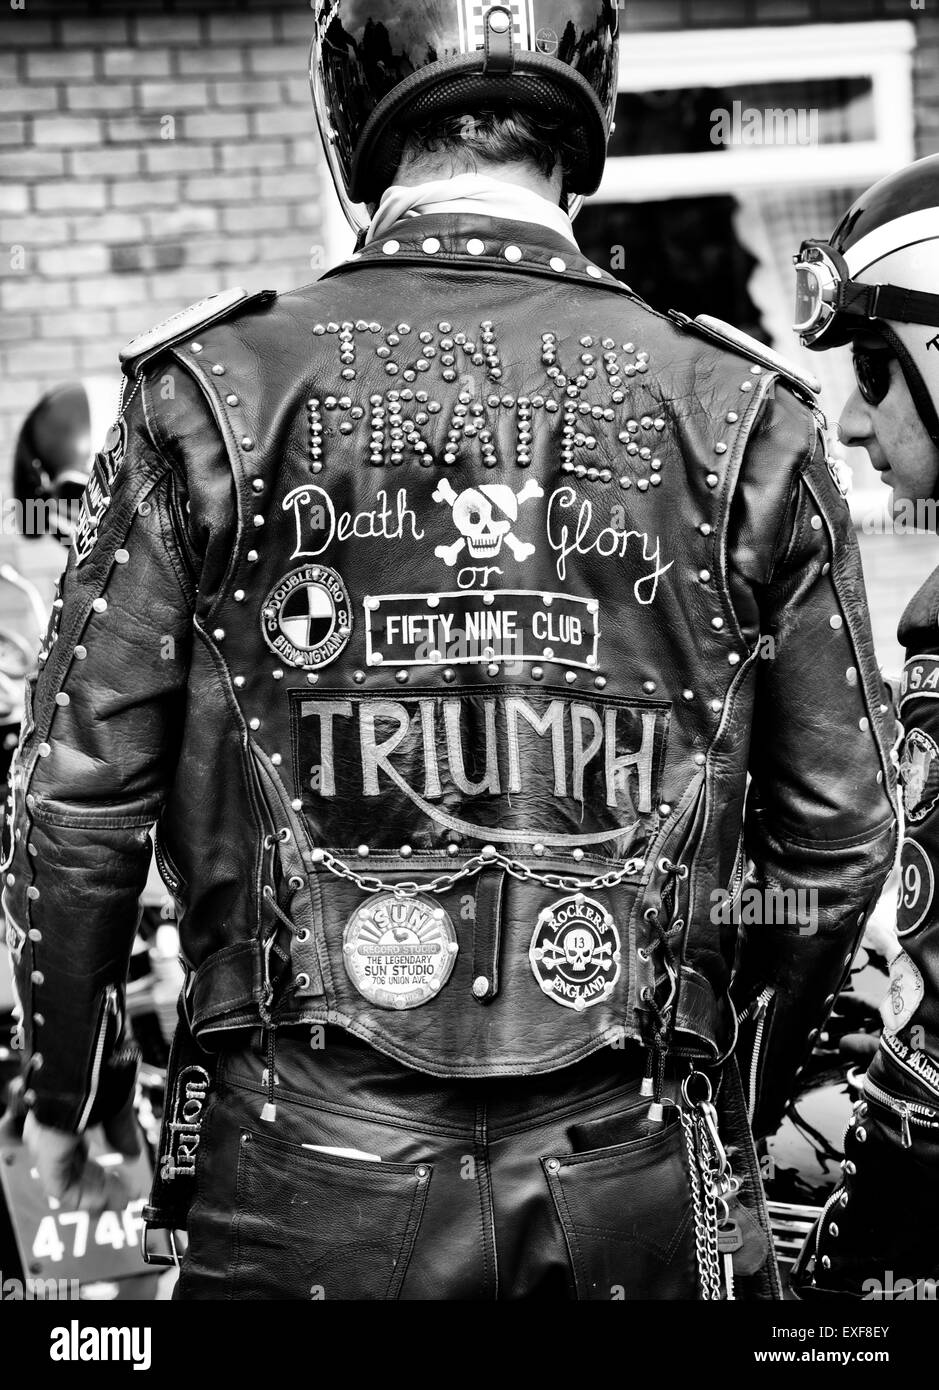 rocker motorcycle jacket